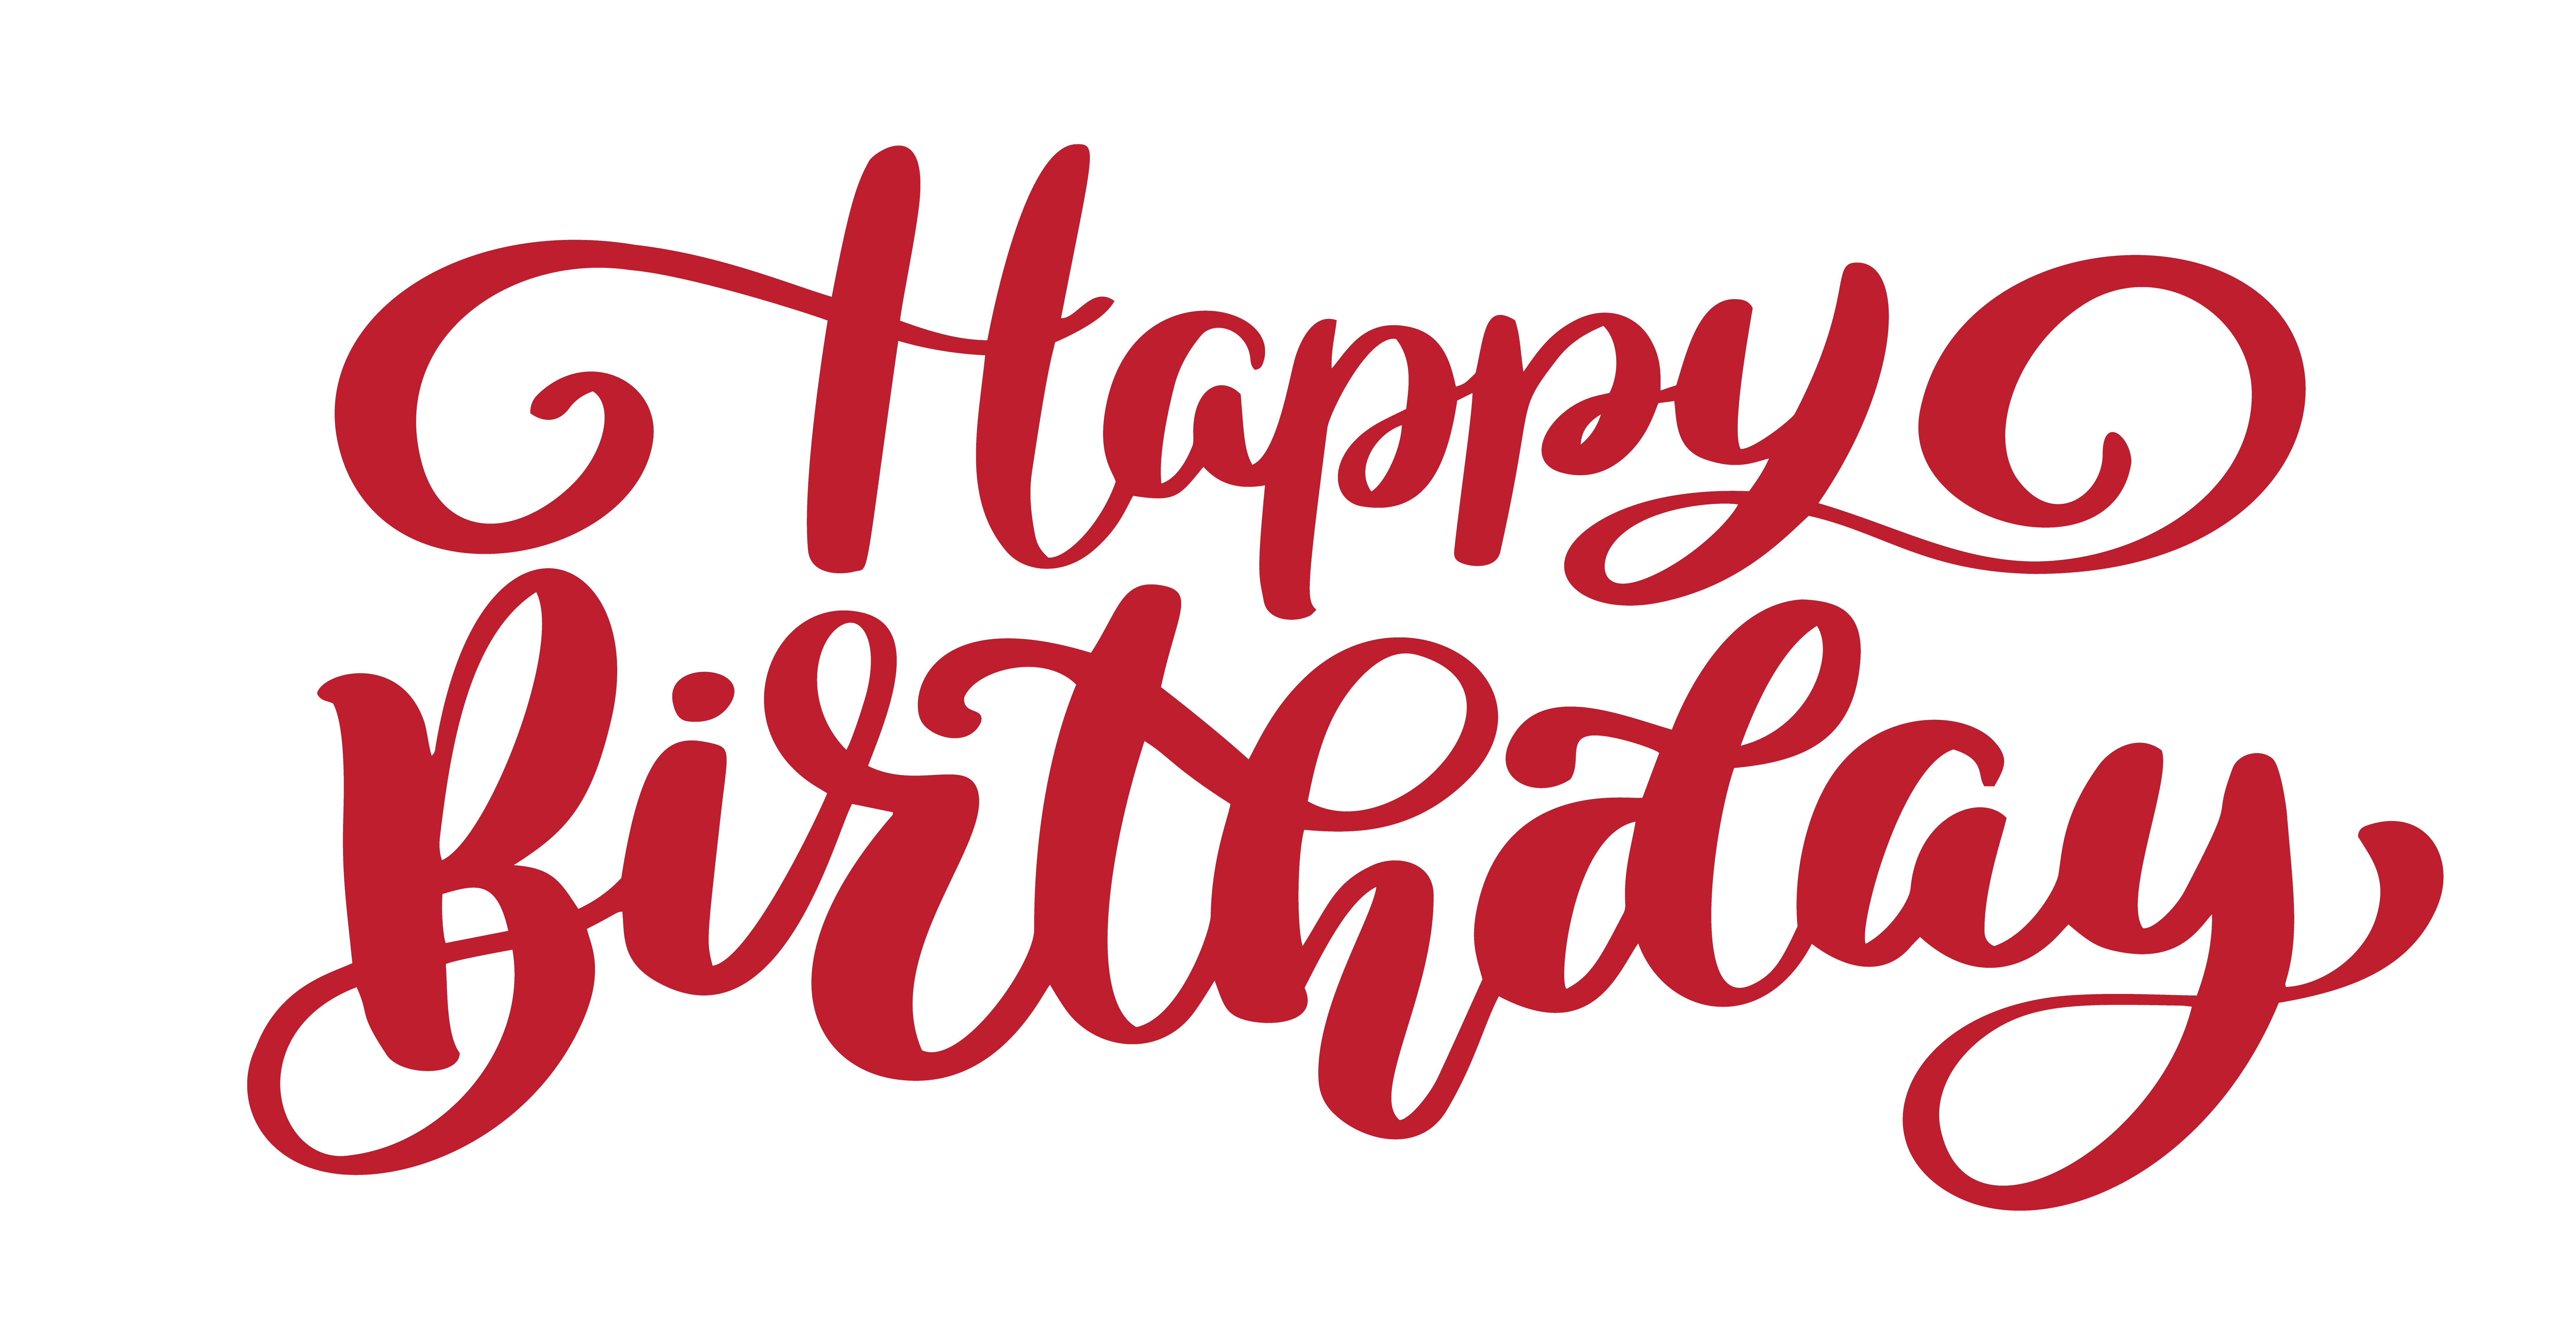 Download Happy Birthday Hand drawn text phrase - Download Free Vectors, Clipart Graphics & Vector Art